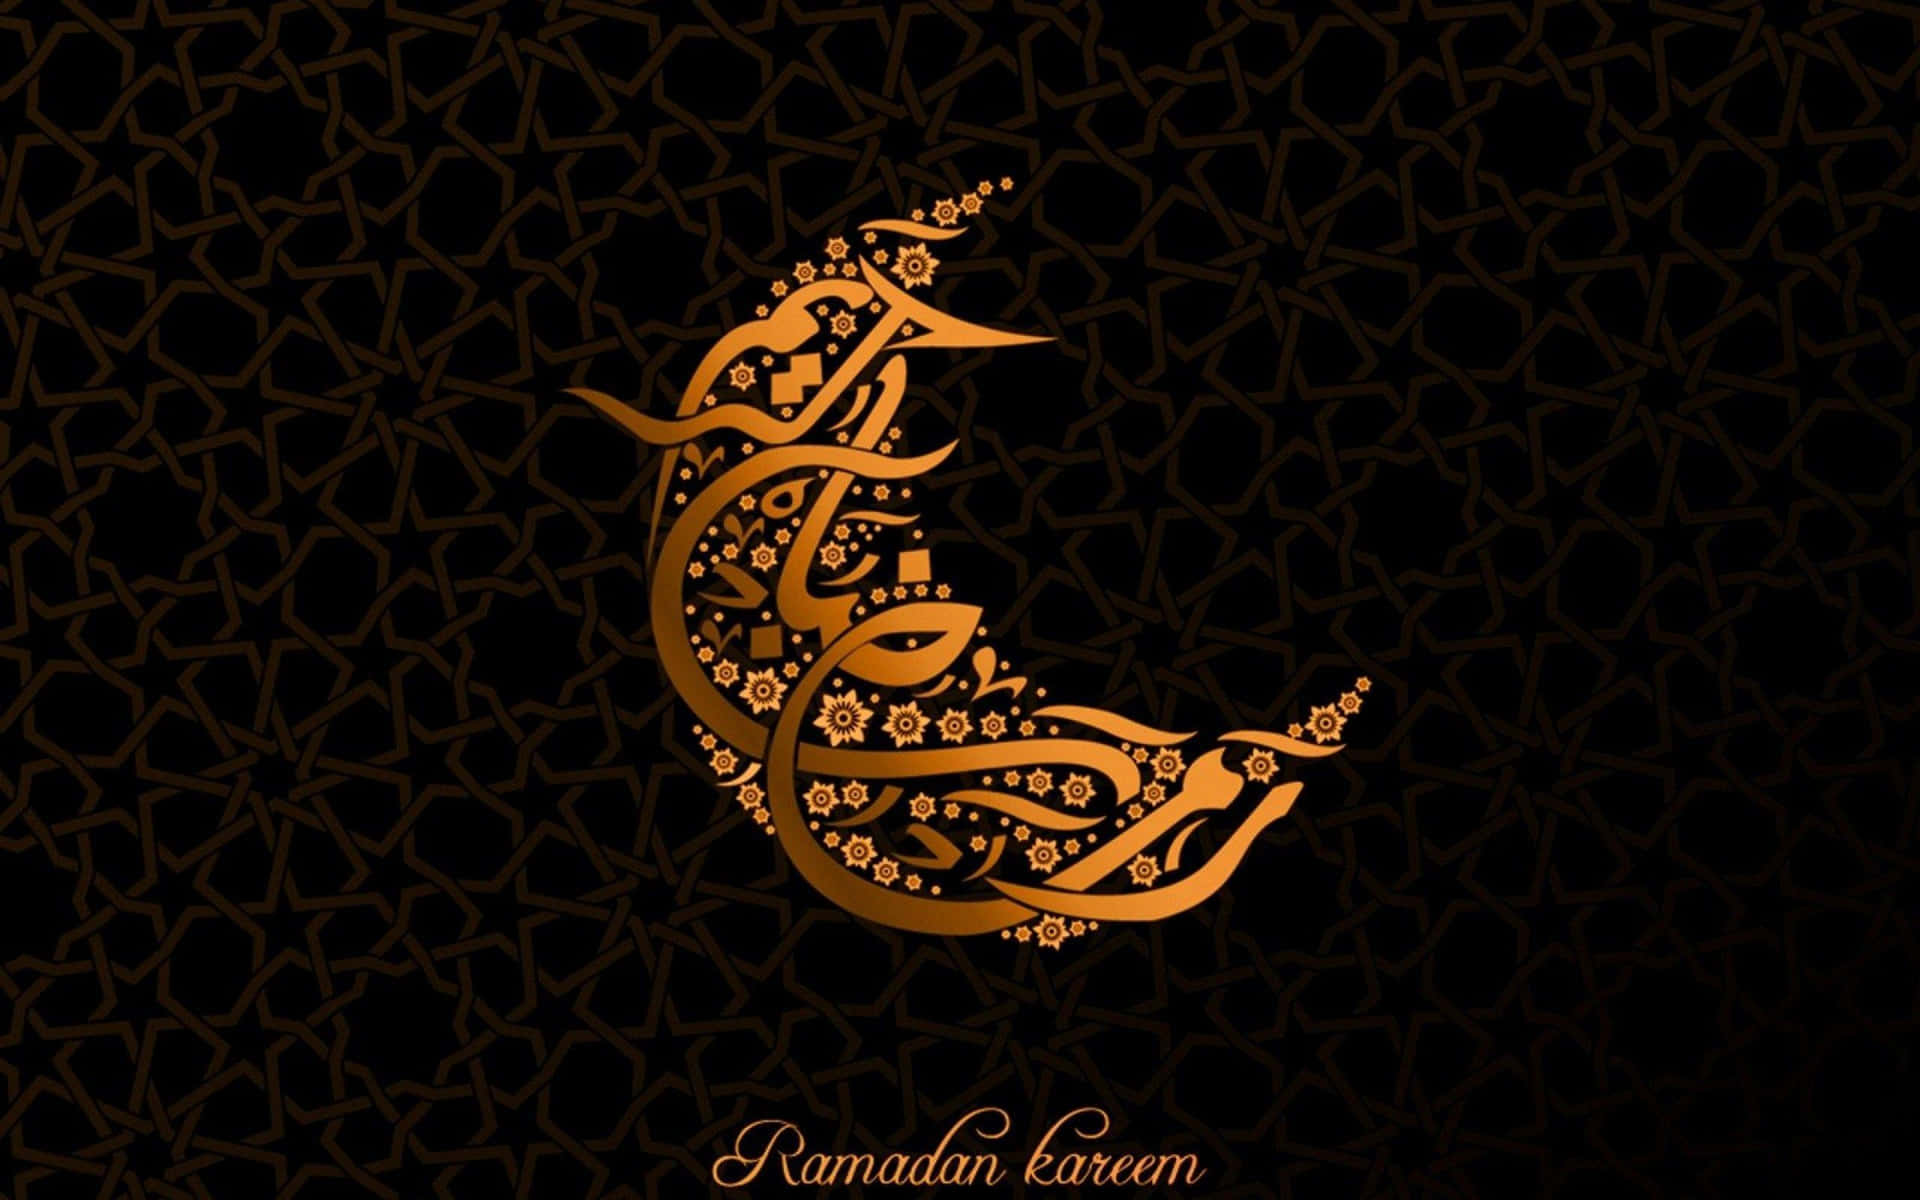 "A blessed Ramadan Mubarak to all celebrating"